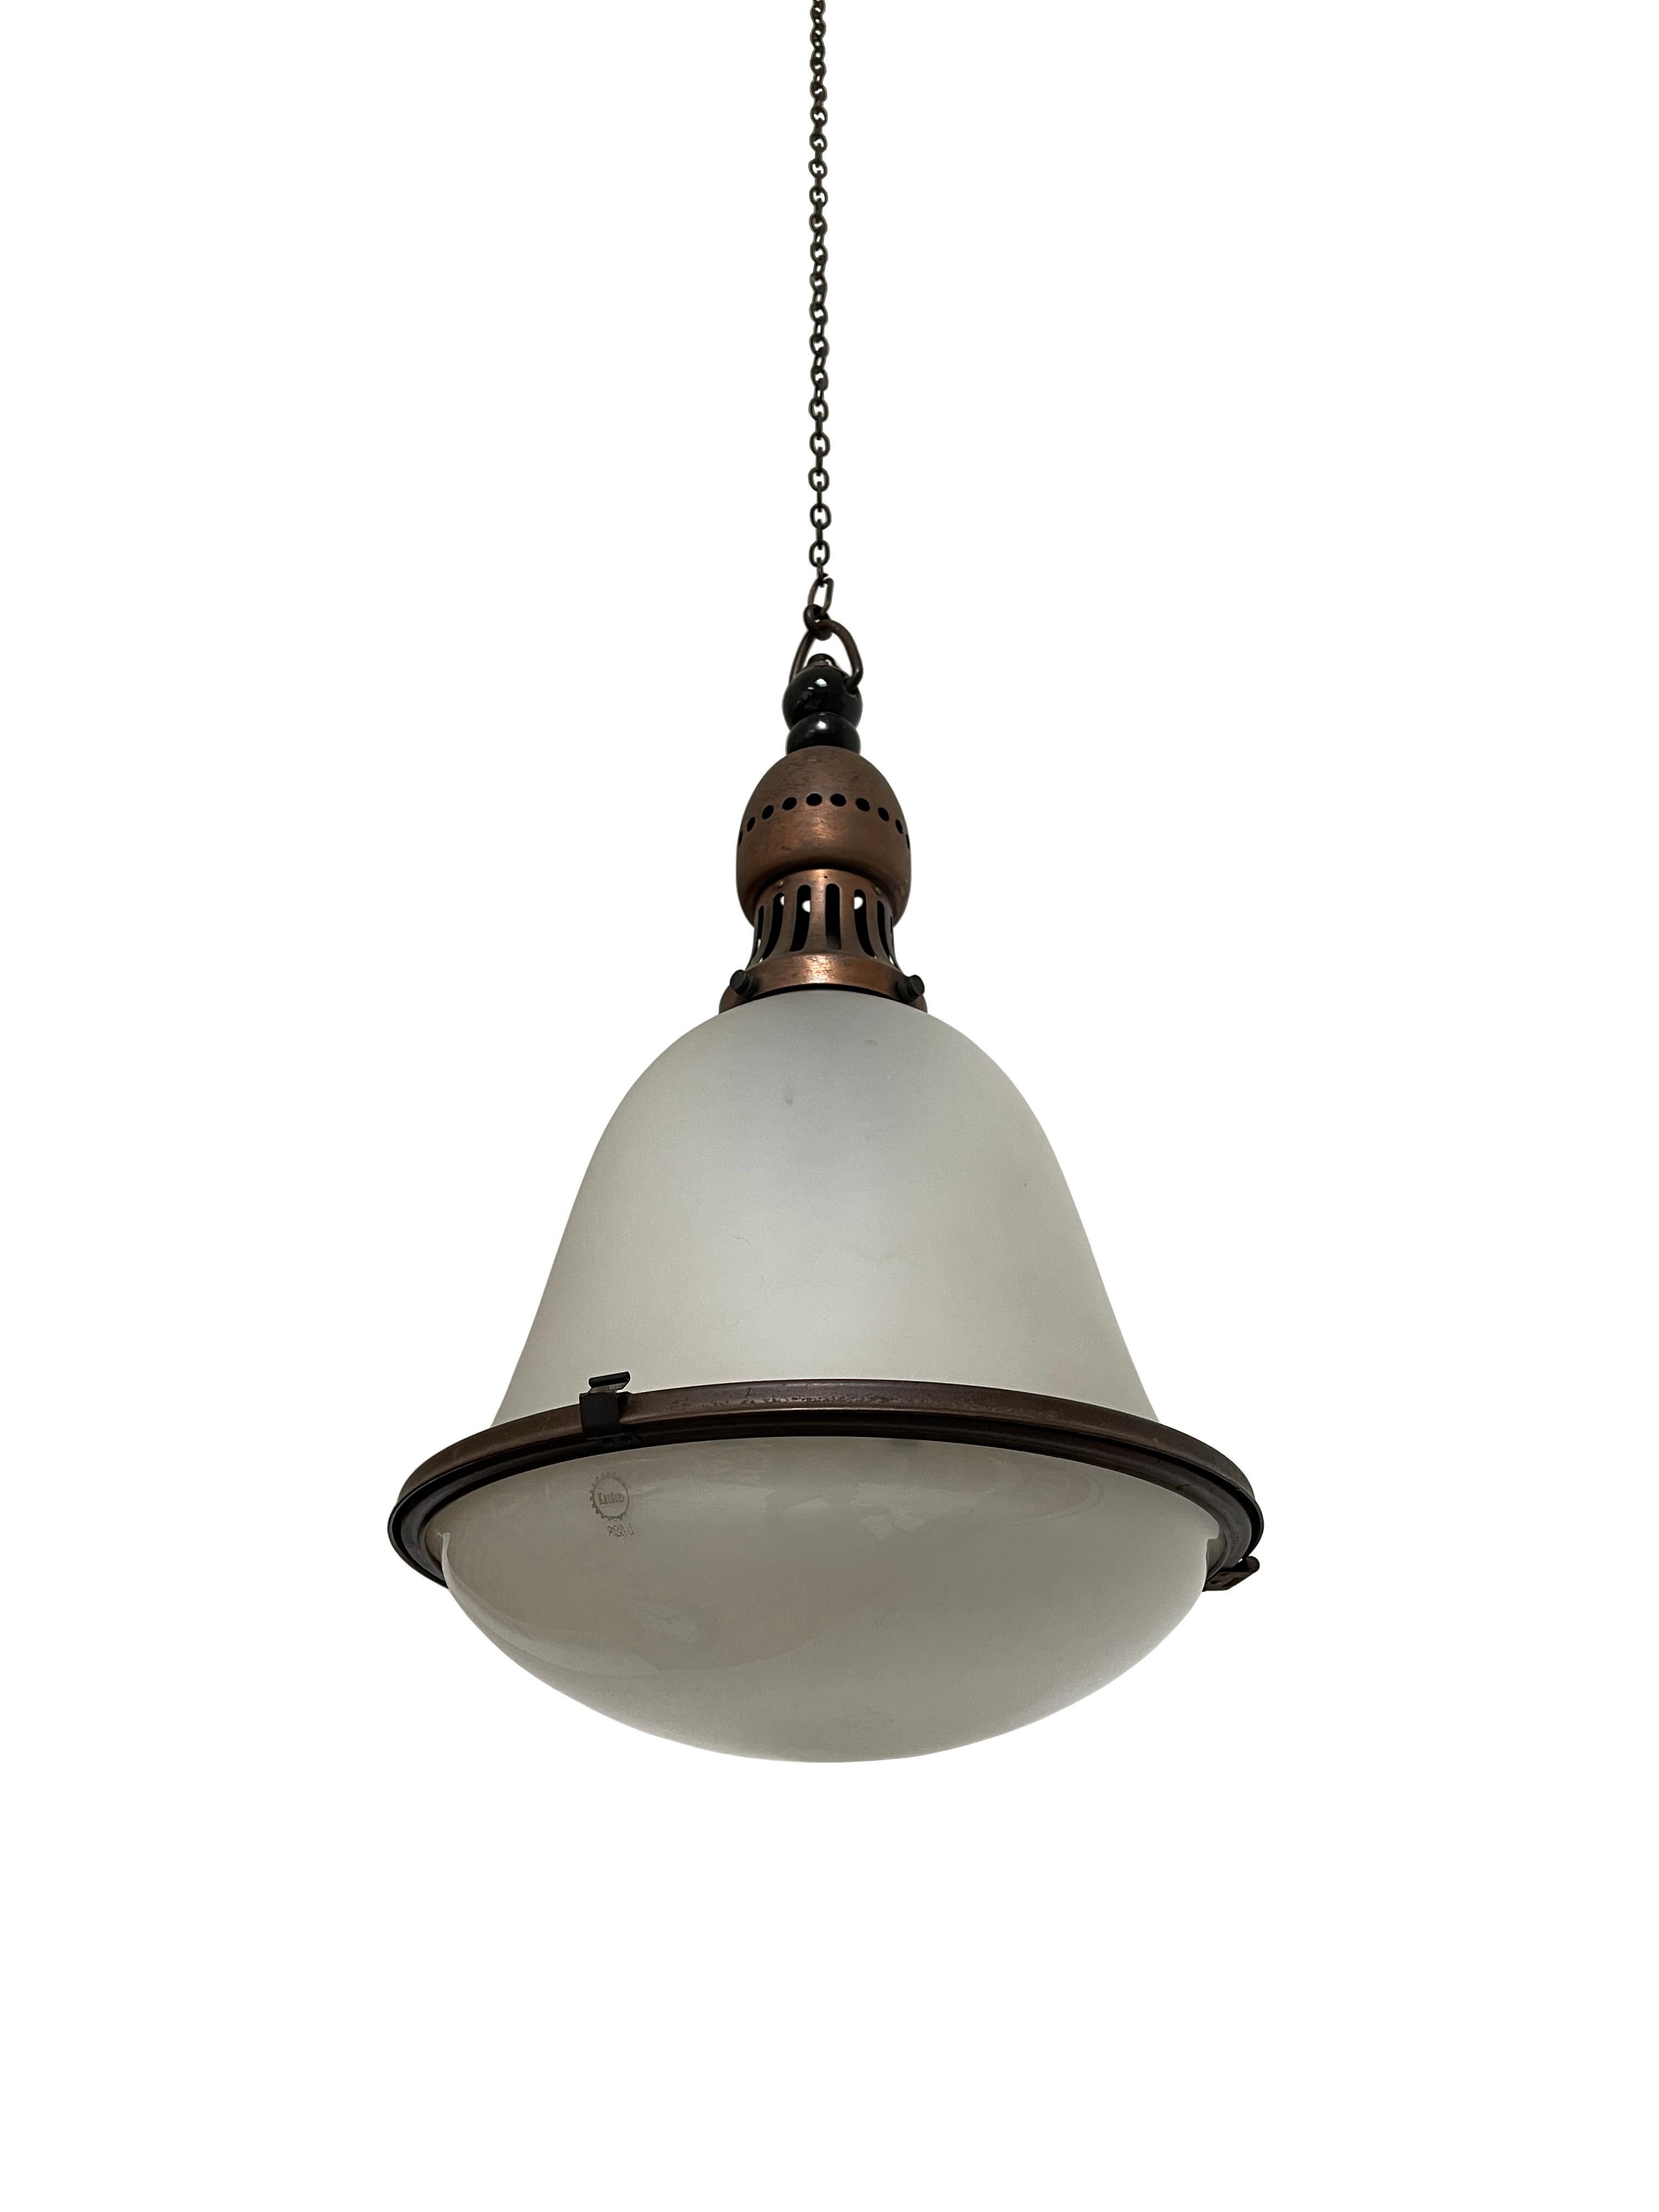 German Antique Vintage Bauhaus Kandem Opaline Etched Glass Ceiling Pendant Light Lamp For Sale